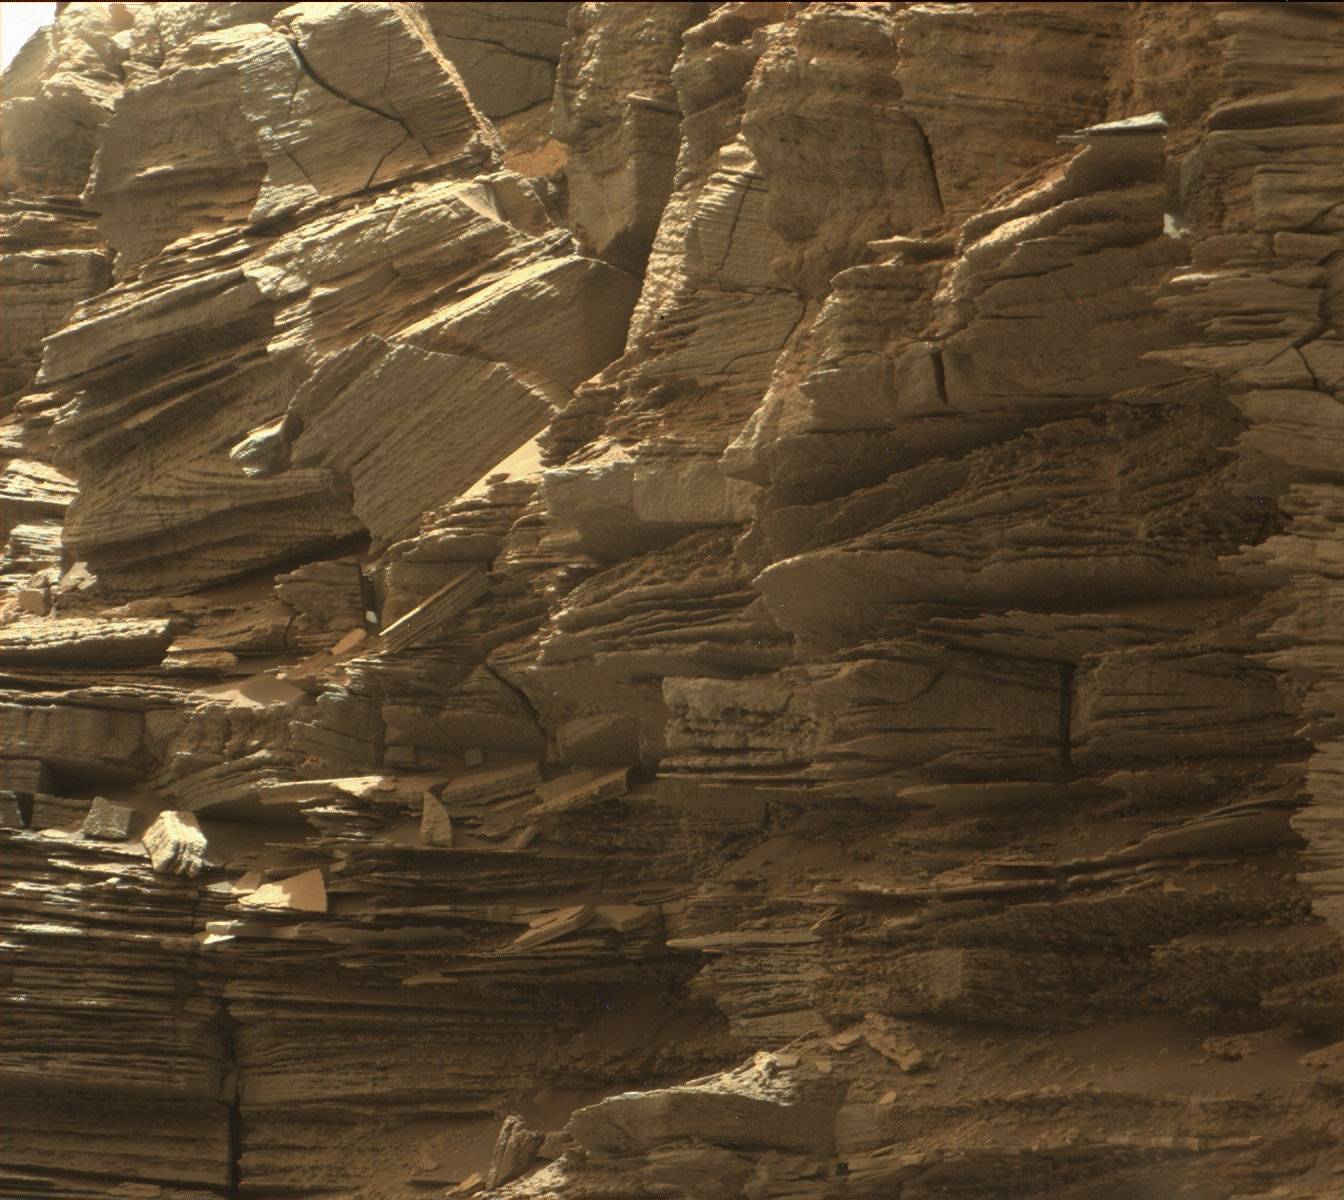 mars-curiosity-rover-msl-rock-layers-PIA21043-full2.jpg